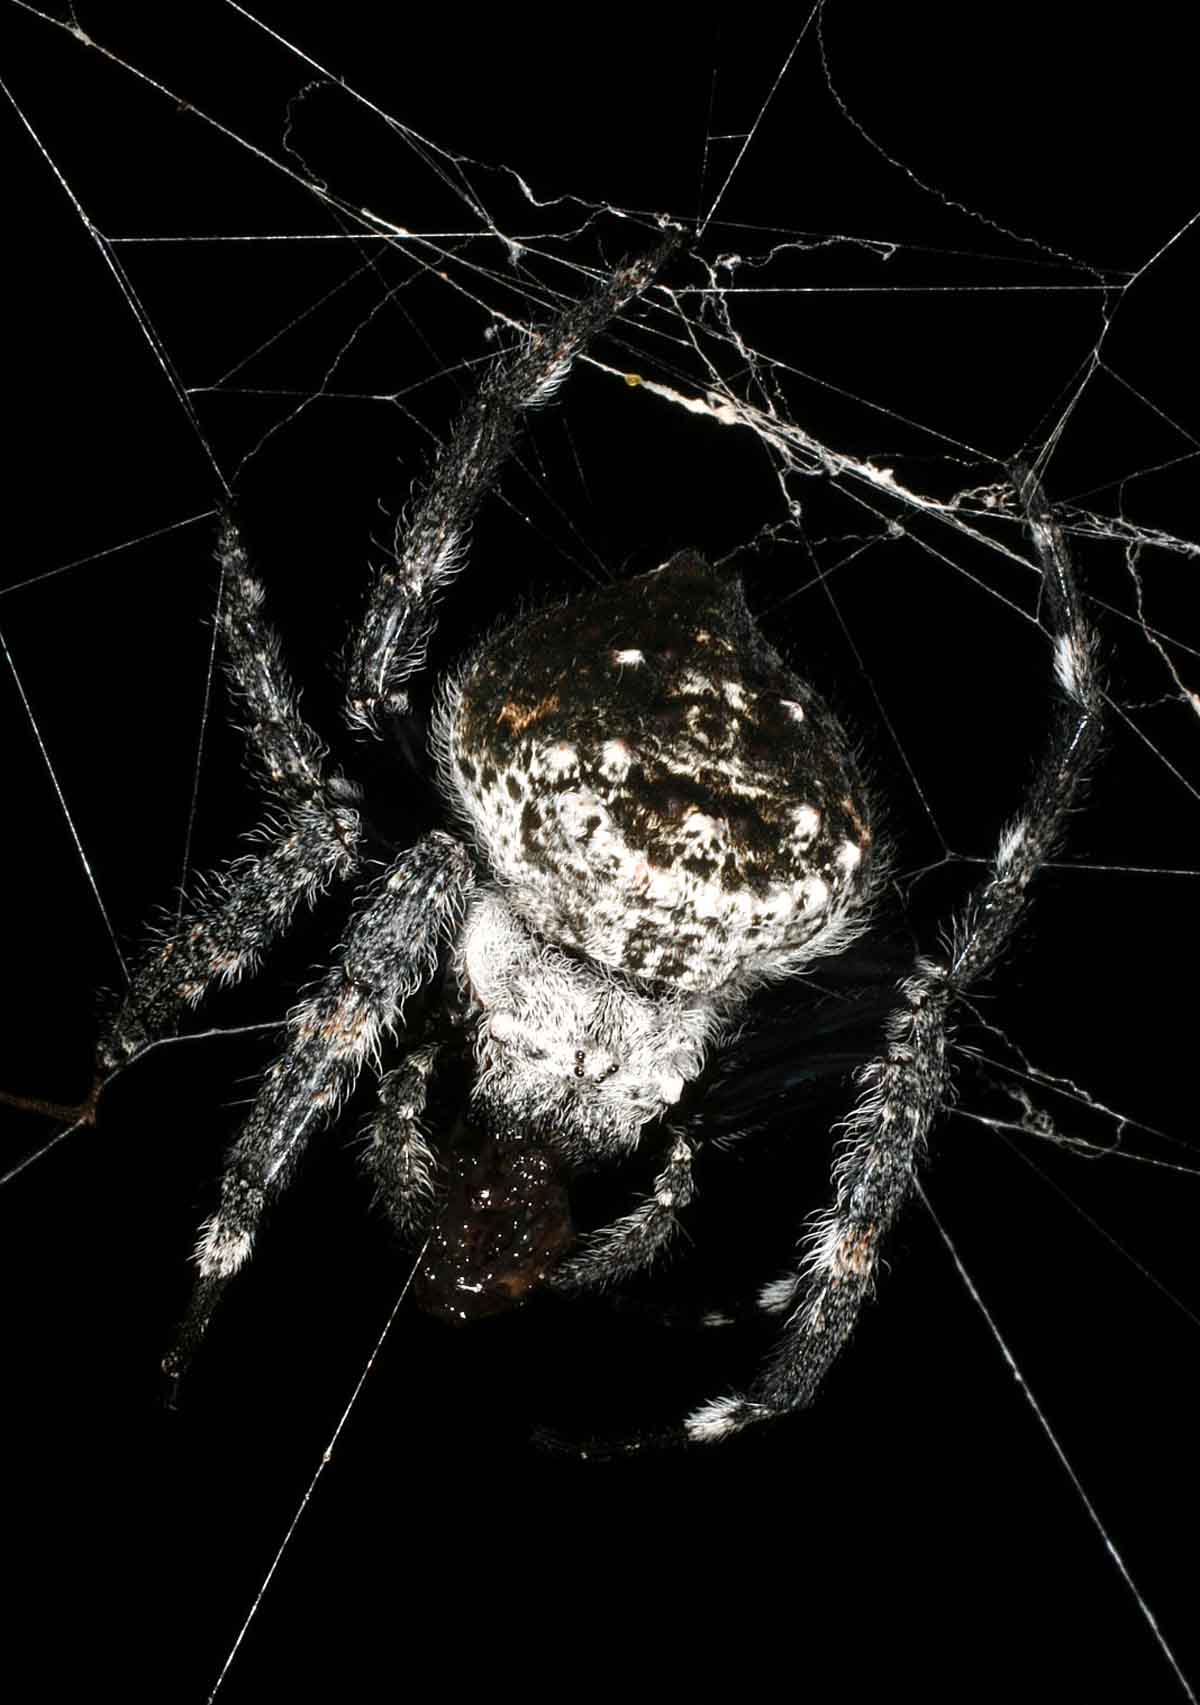 worlds biggest spider on record